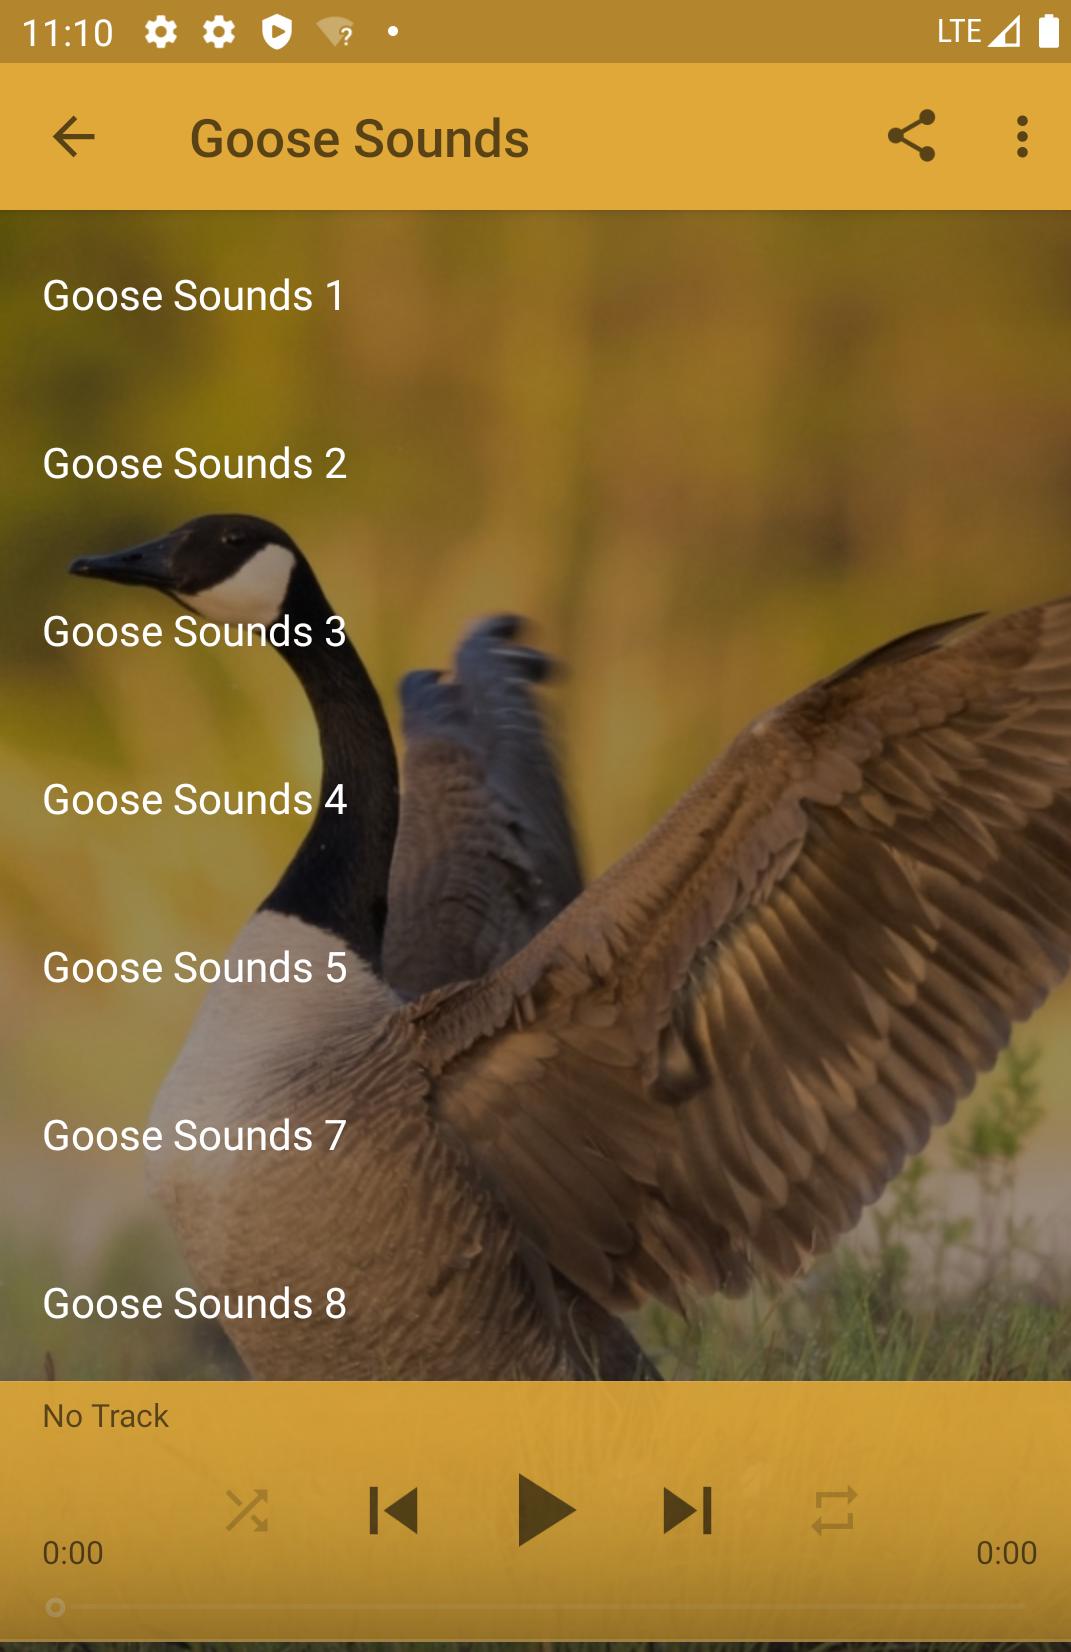 Звук гуся слушать. Звук гуся. Бег гуся звук. Geese Sounds in English. Птица оранжевого цвета похожа на гуся звуки.